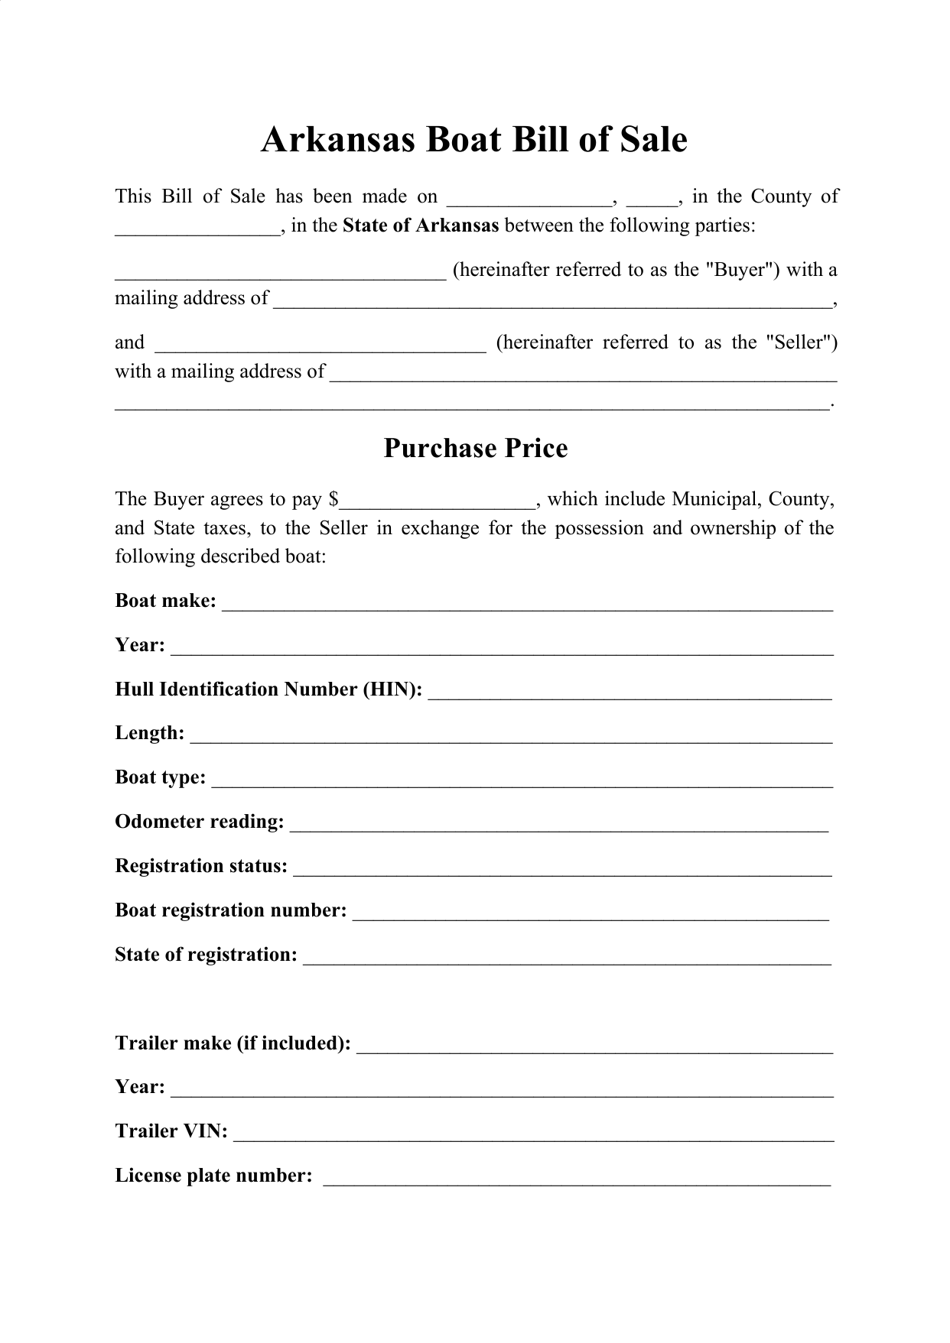 Arkansas Boat Bill of Sale Form Download Printable PDF Templateroller